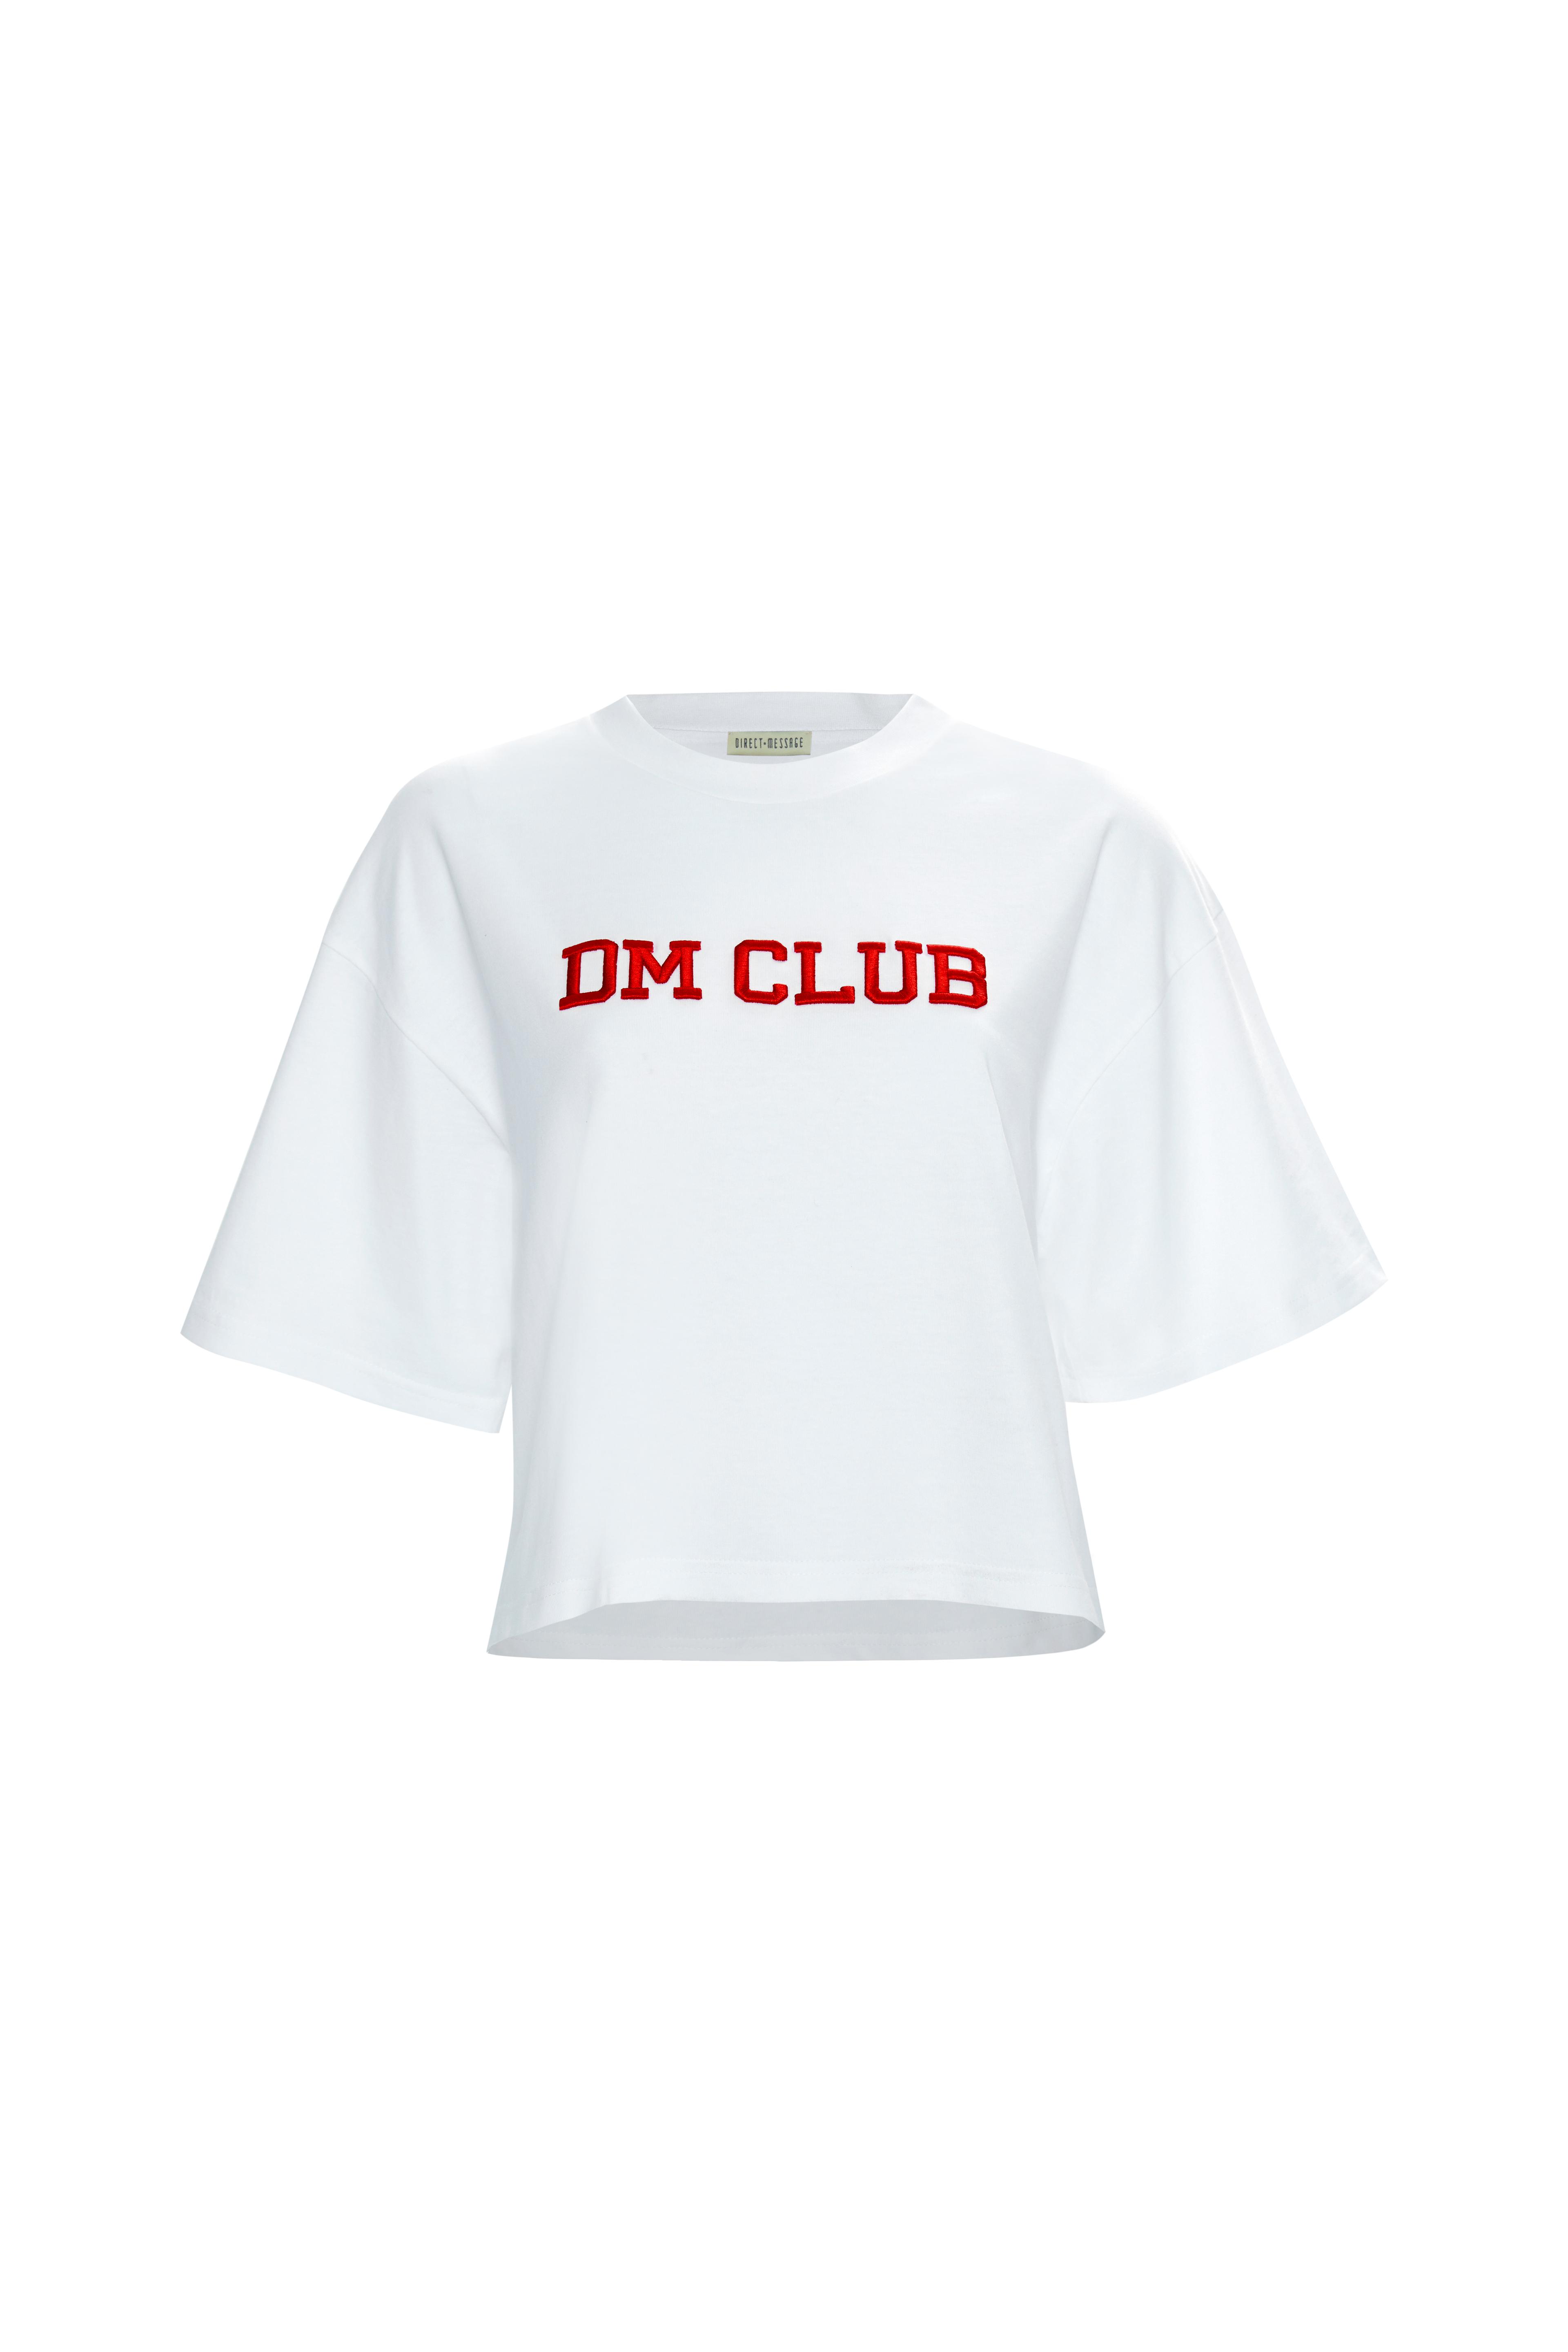 Direct Message Crop T-shirt - White